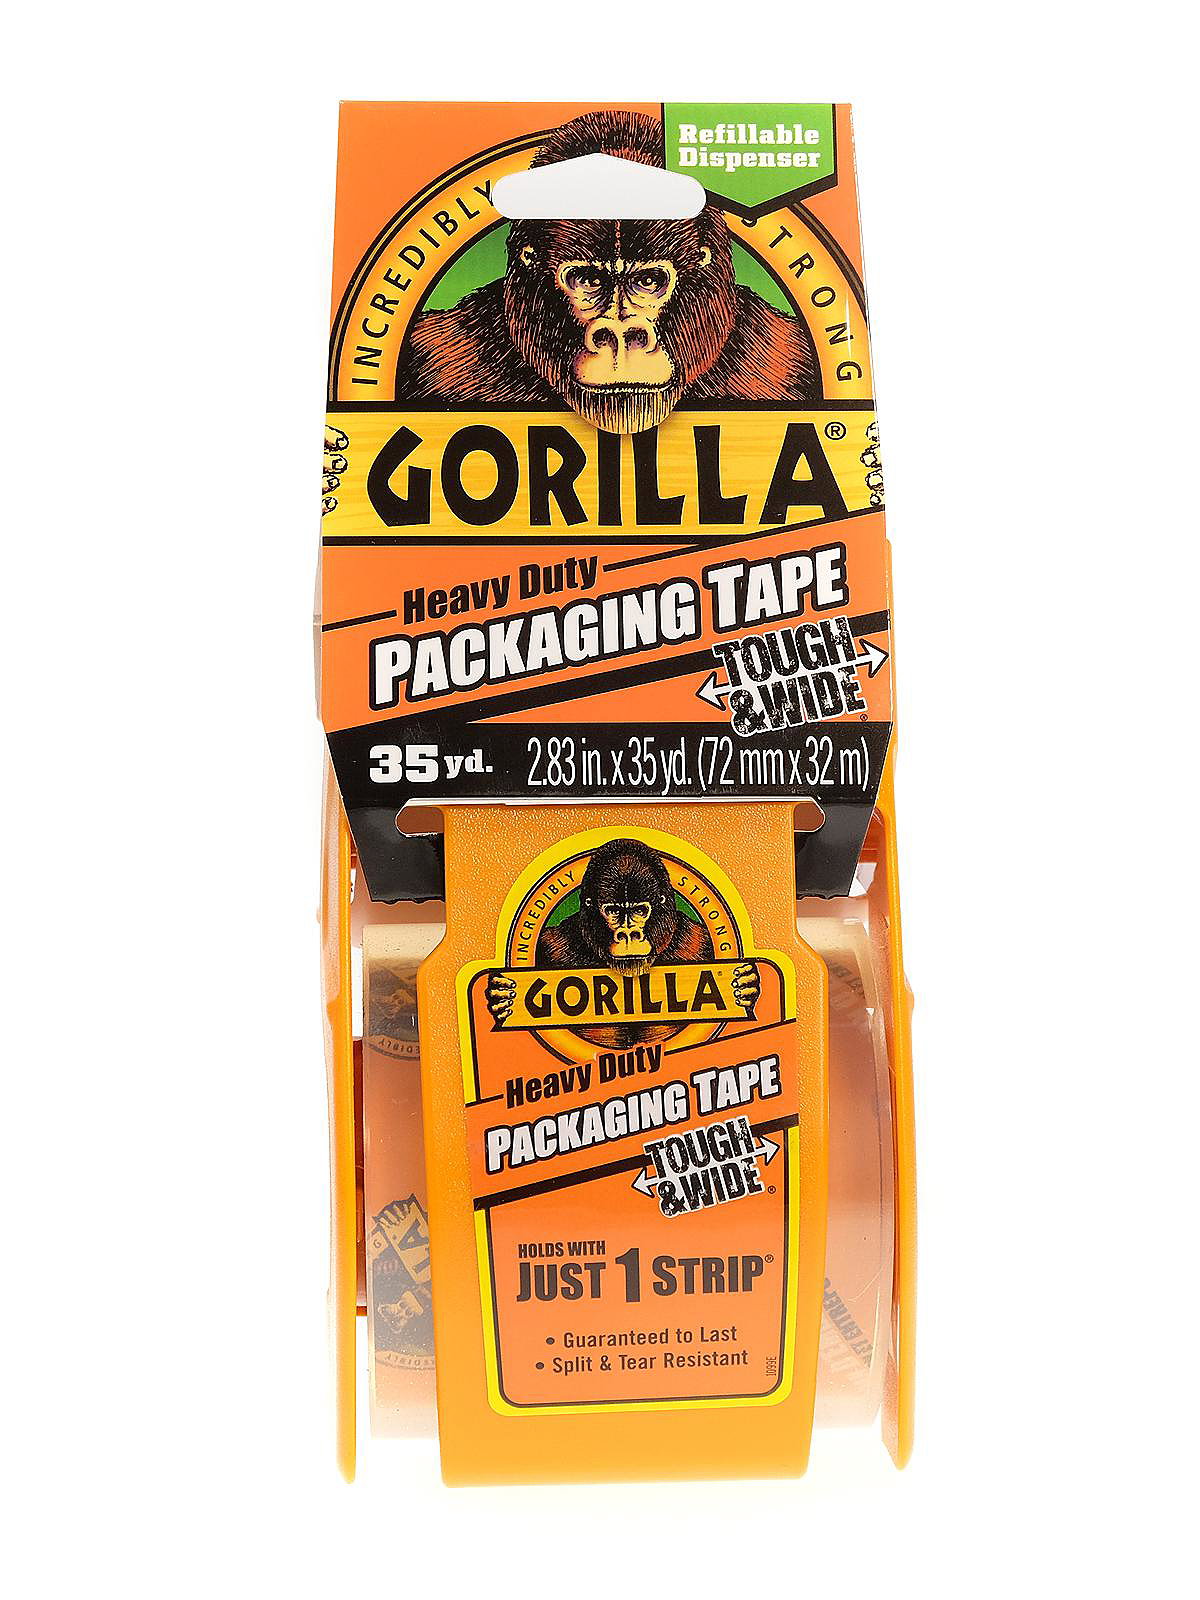 Packaging Tape (Tuff)